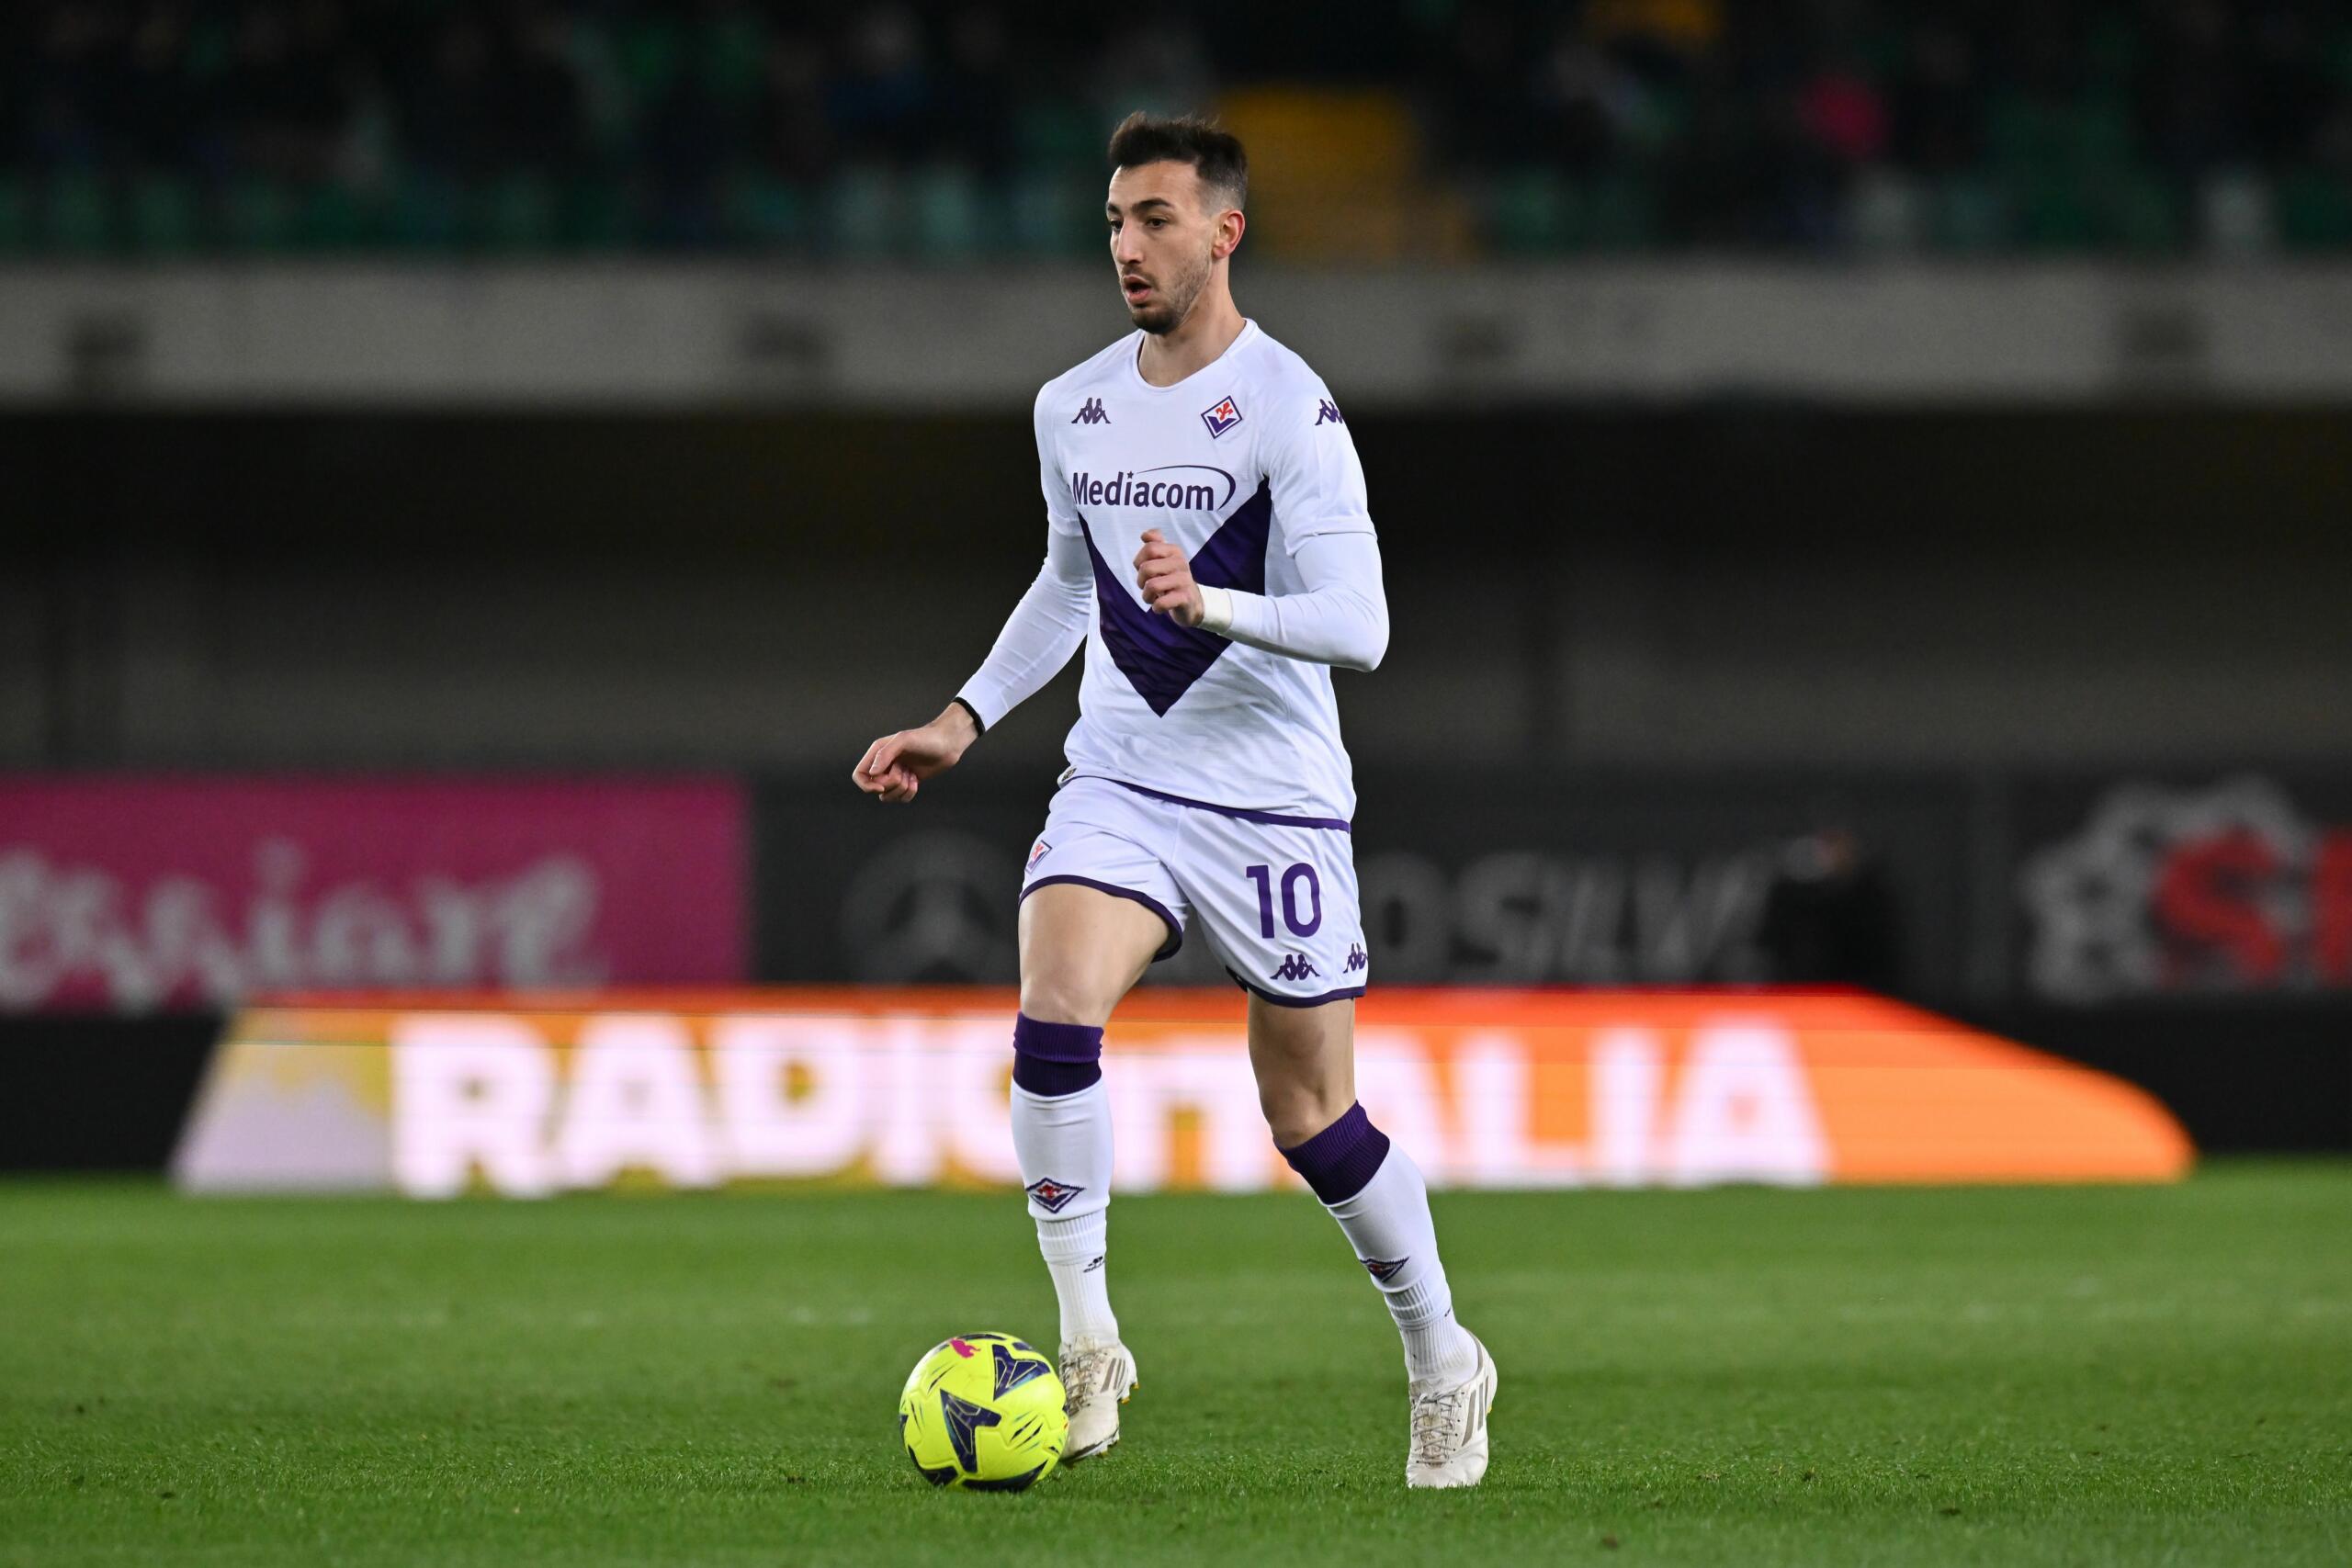 Mercato Fiorentina